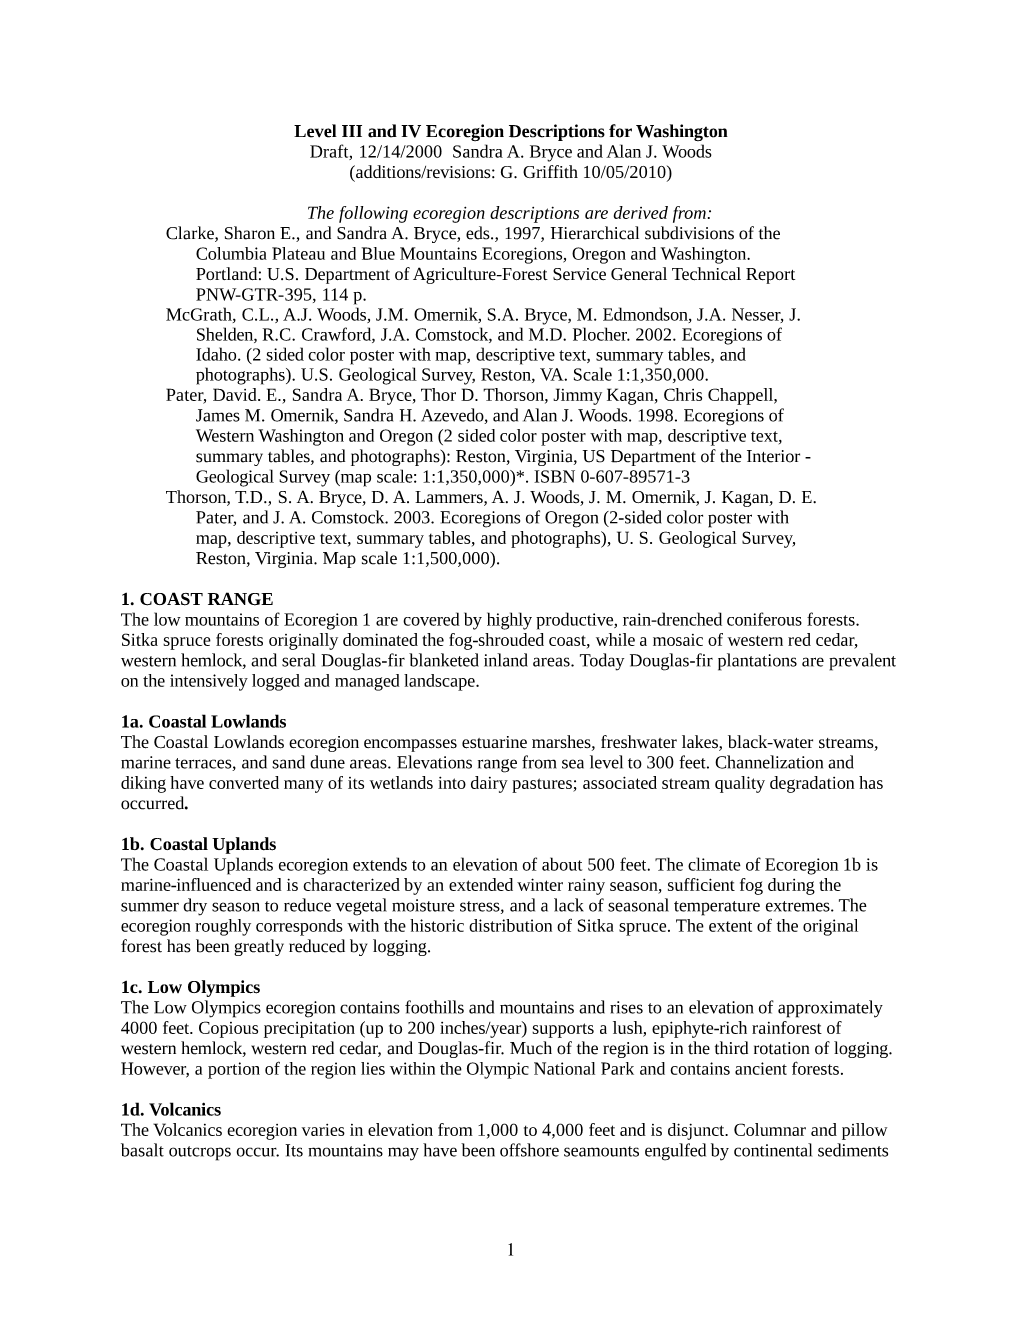 Draft 7 Level III and IV Ecoregion Descriptions for Oregon